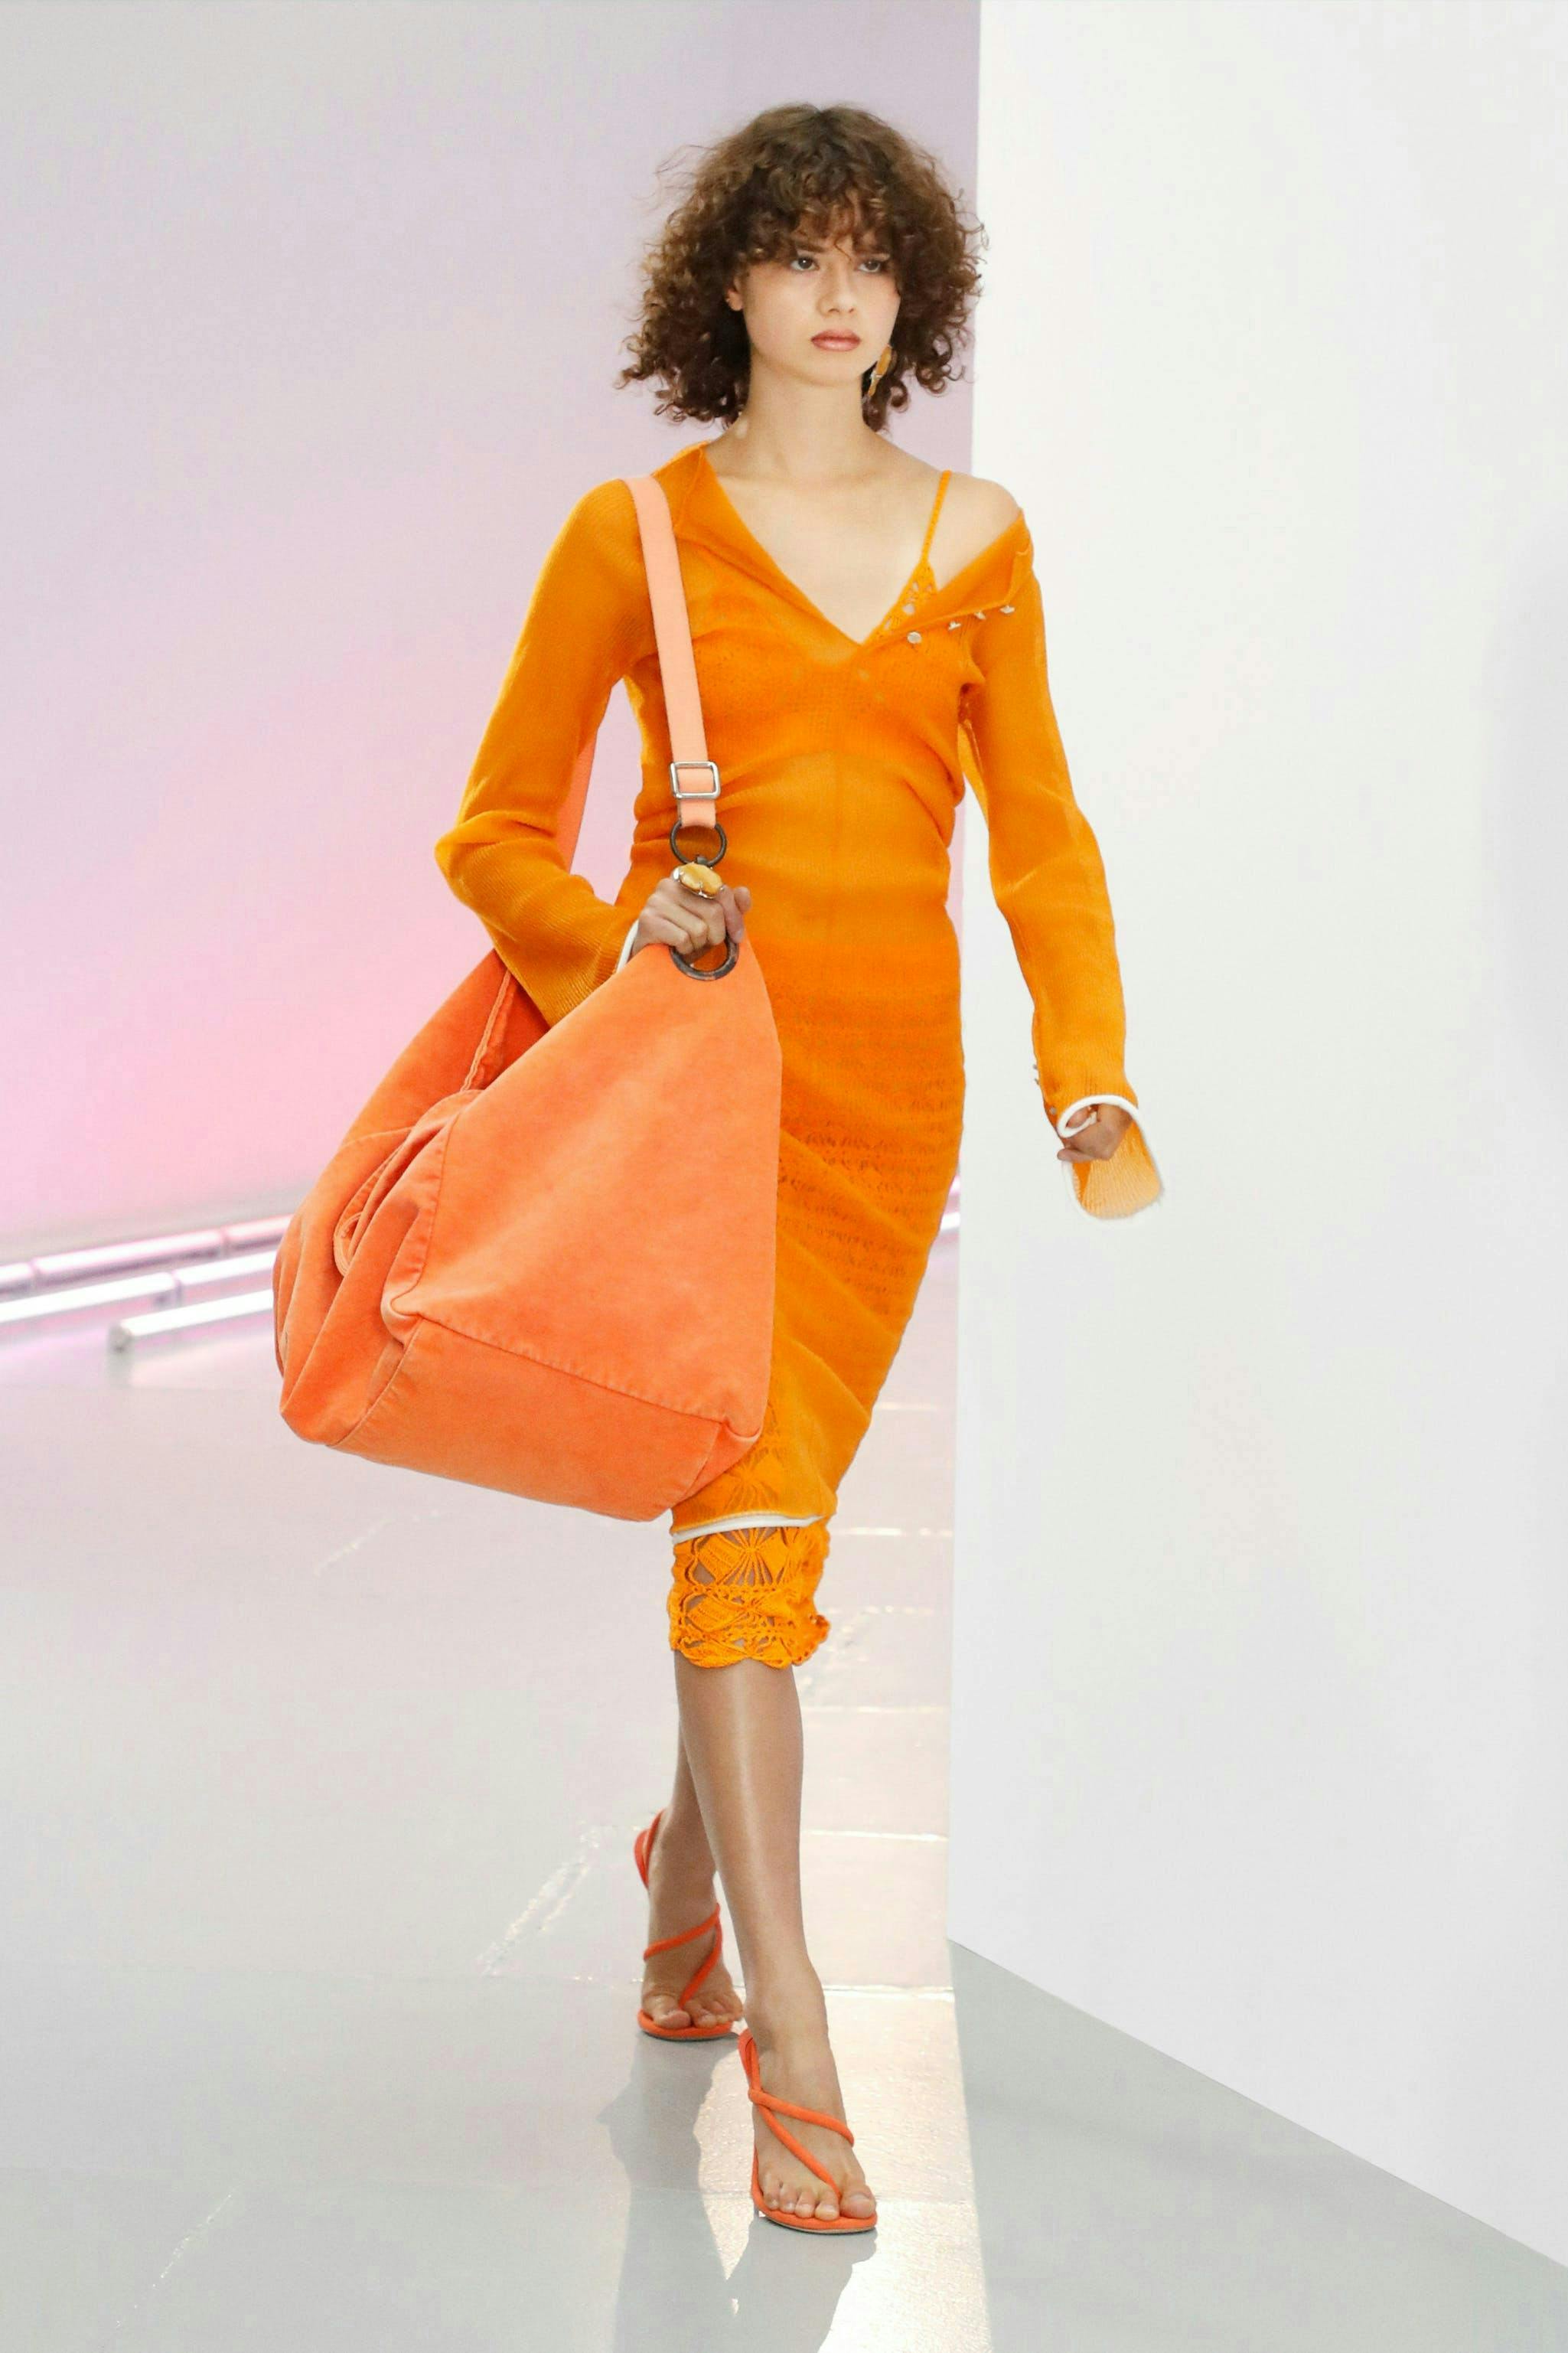 clothing apparel sleeve long sleeve person human female handbag accessories bag